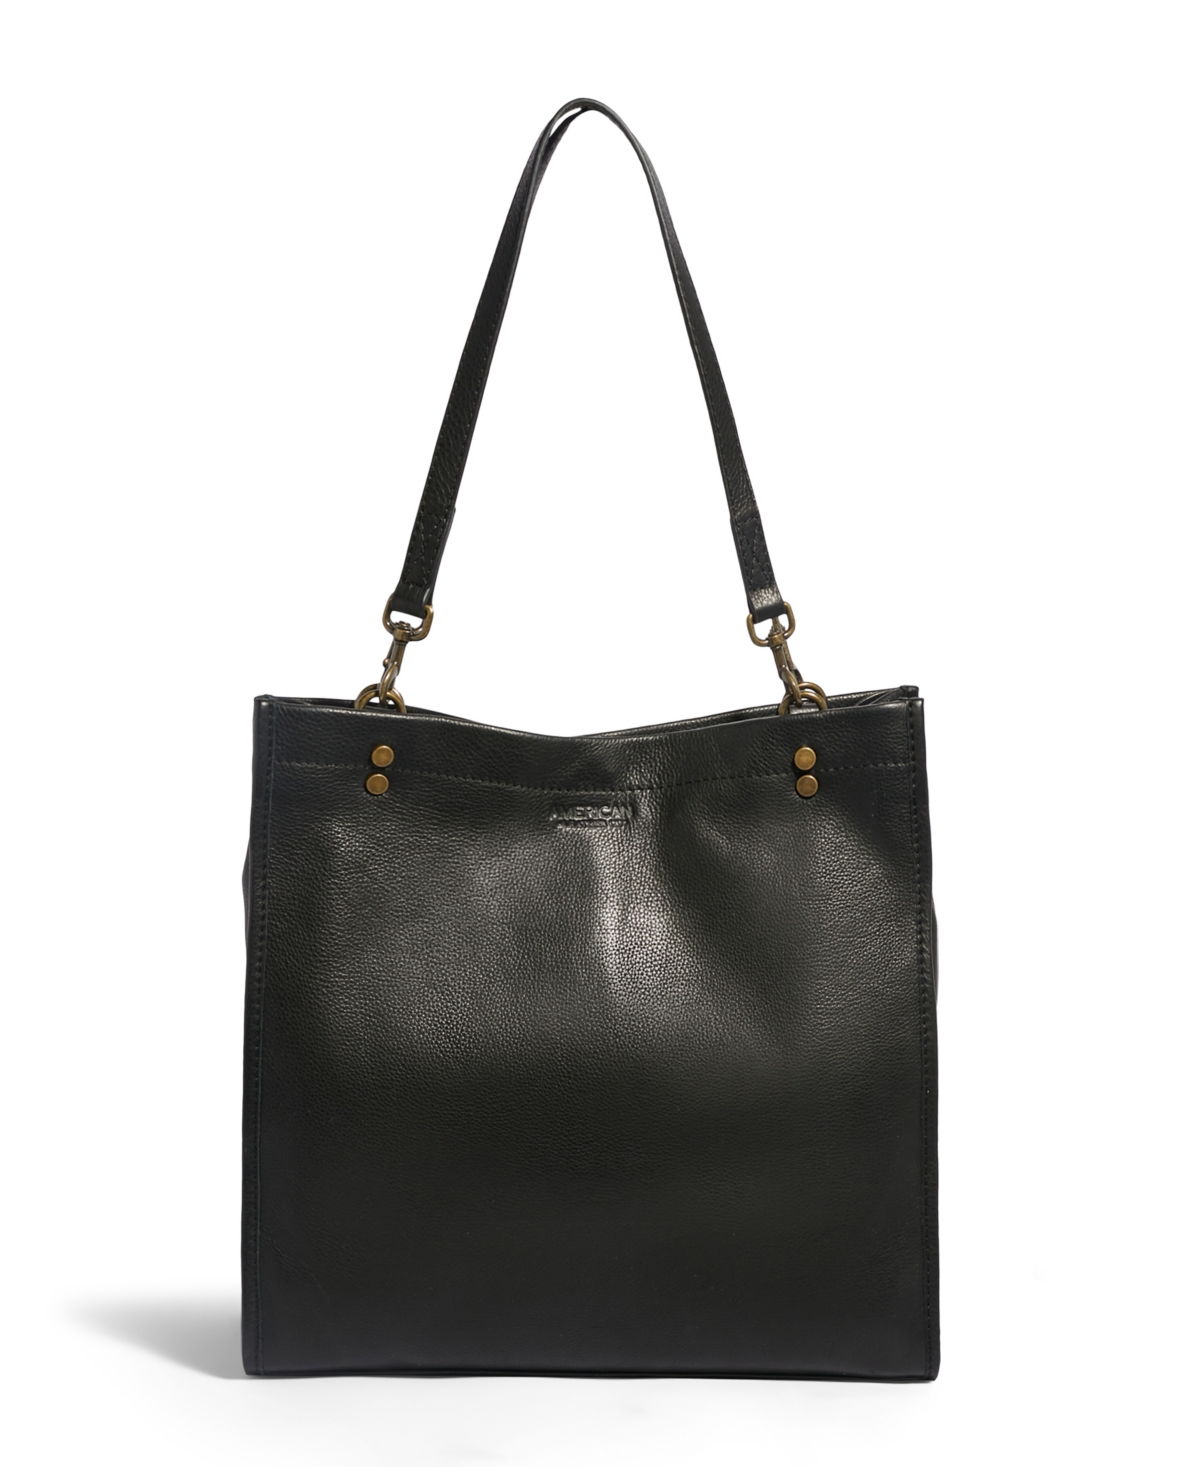 Women's Hope Tote Bag - Black smooth